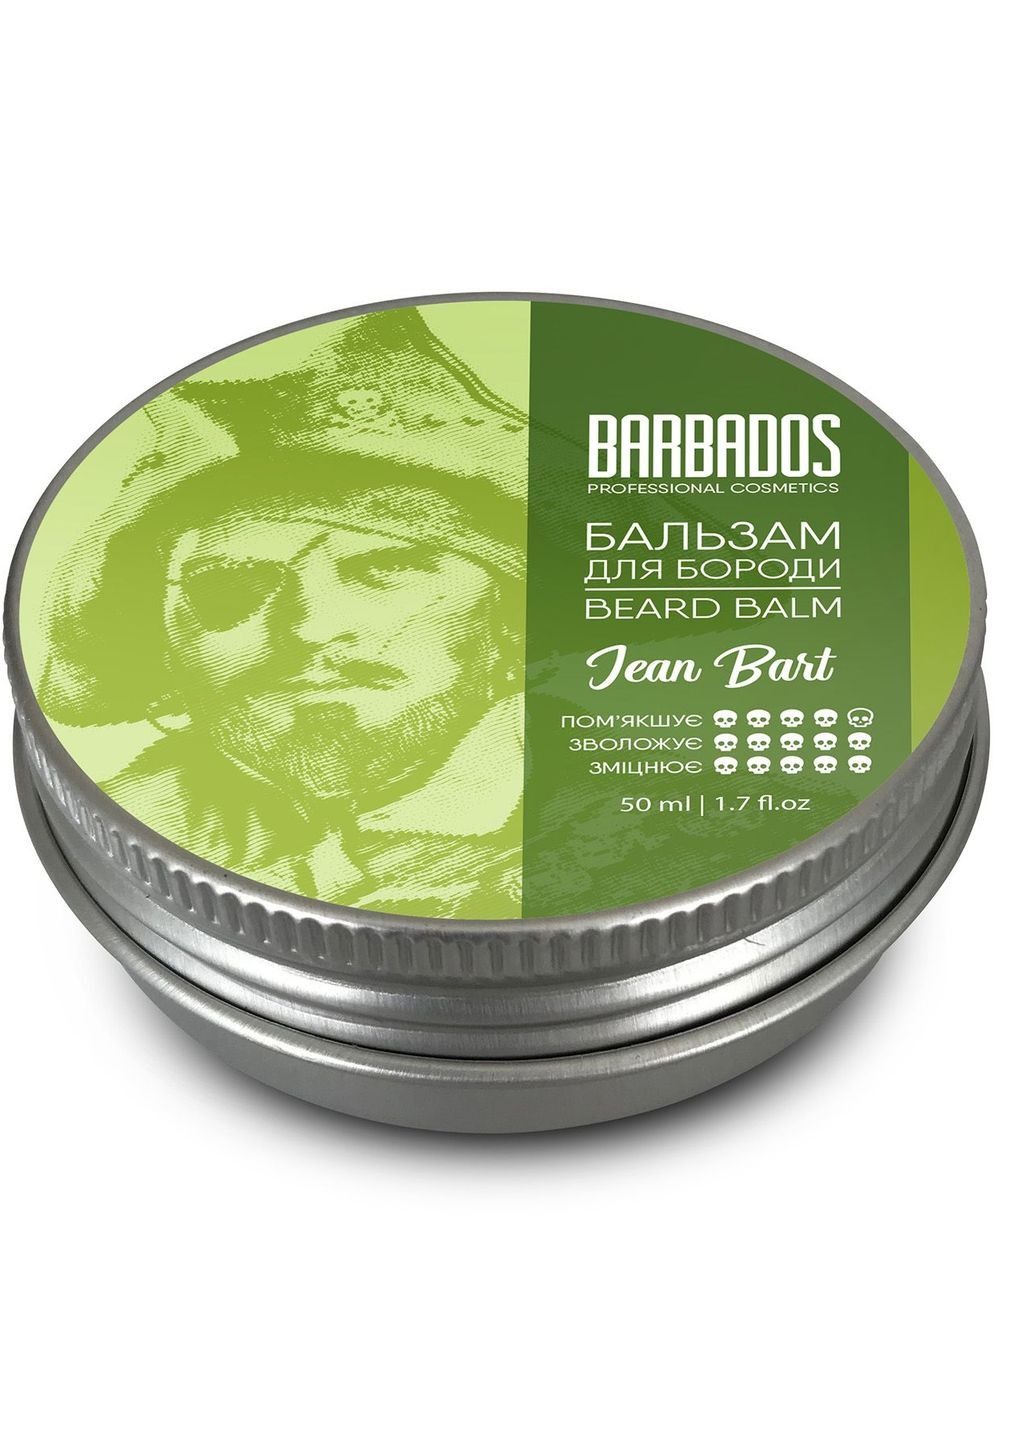 Бальзам для бороди ТМ "Jean Bart" 50 мл Barbados (277167177)